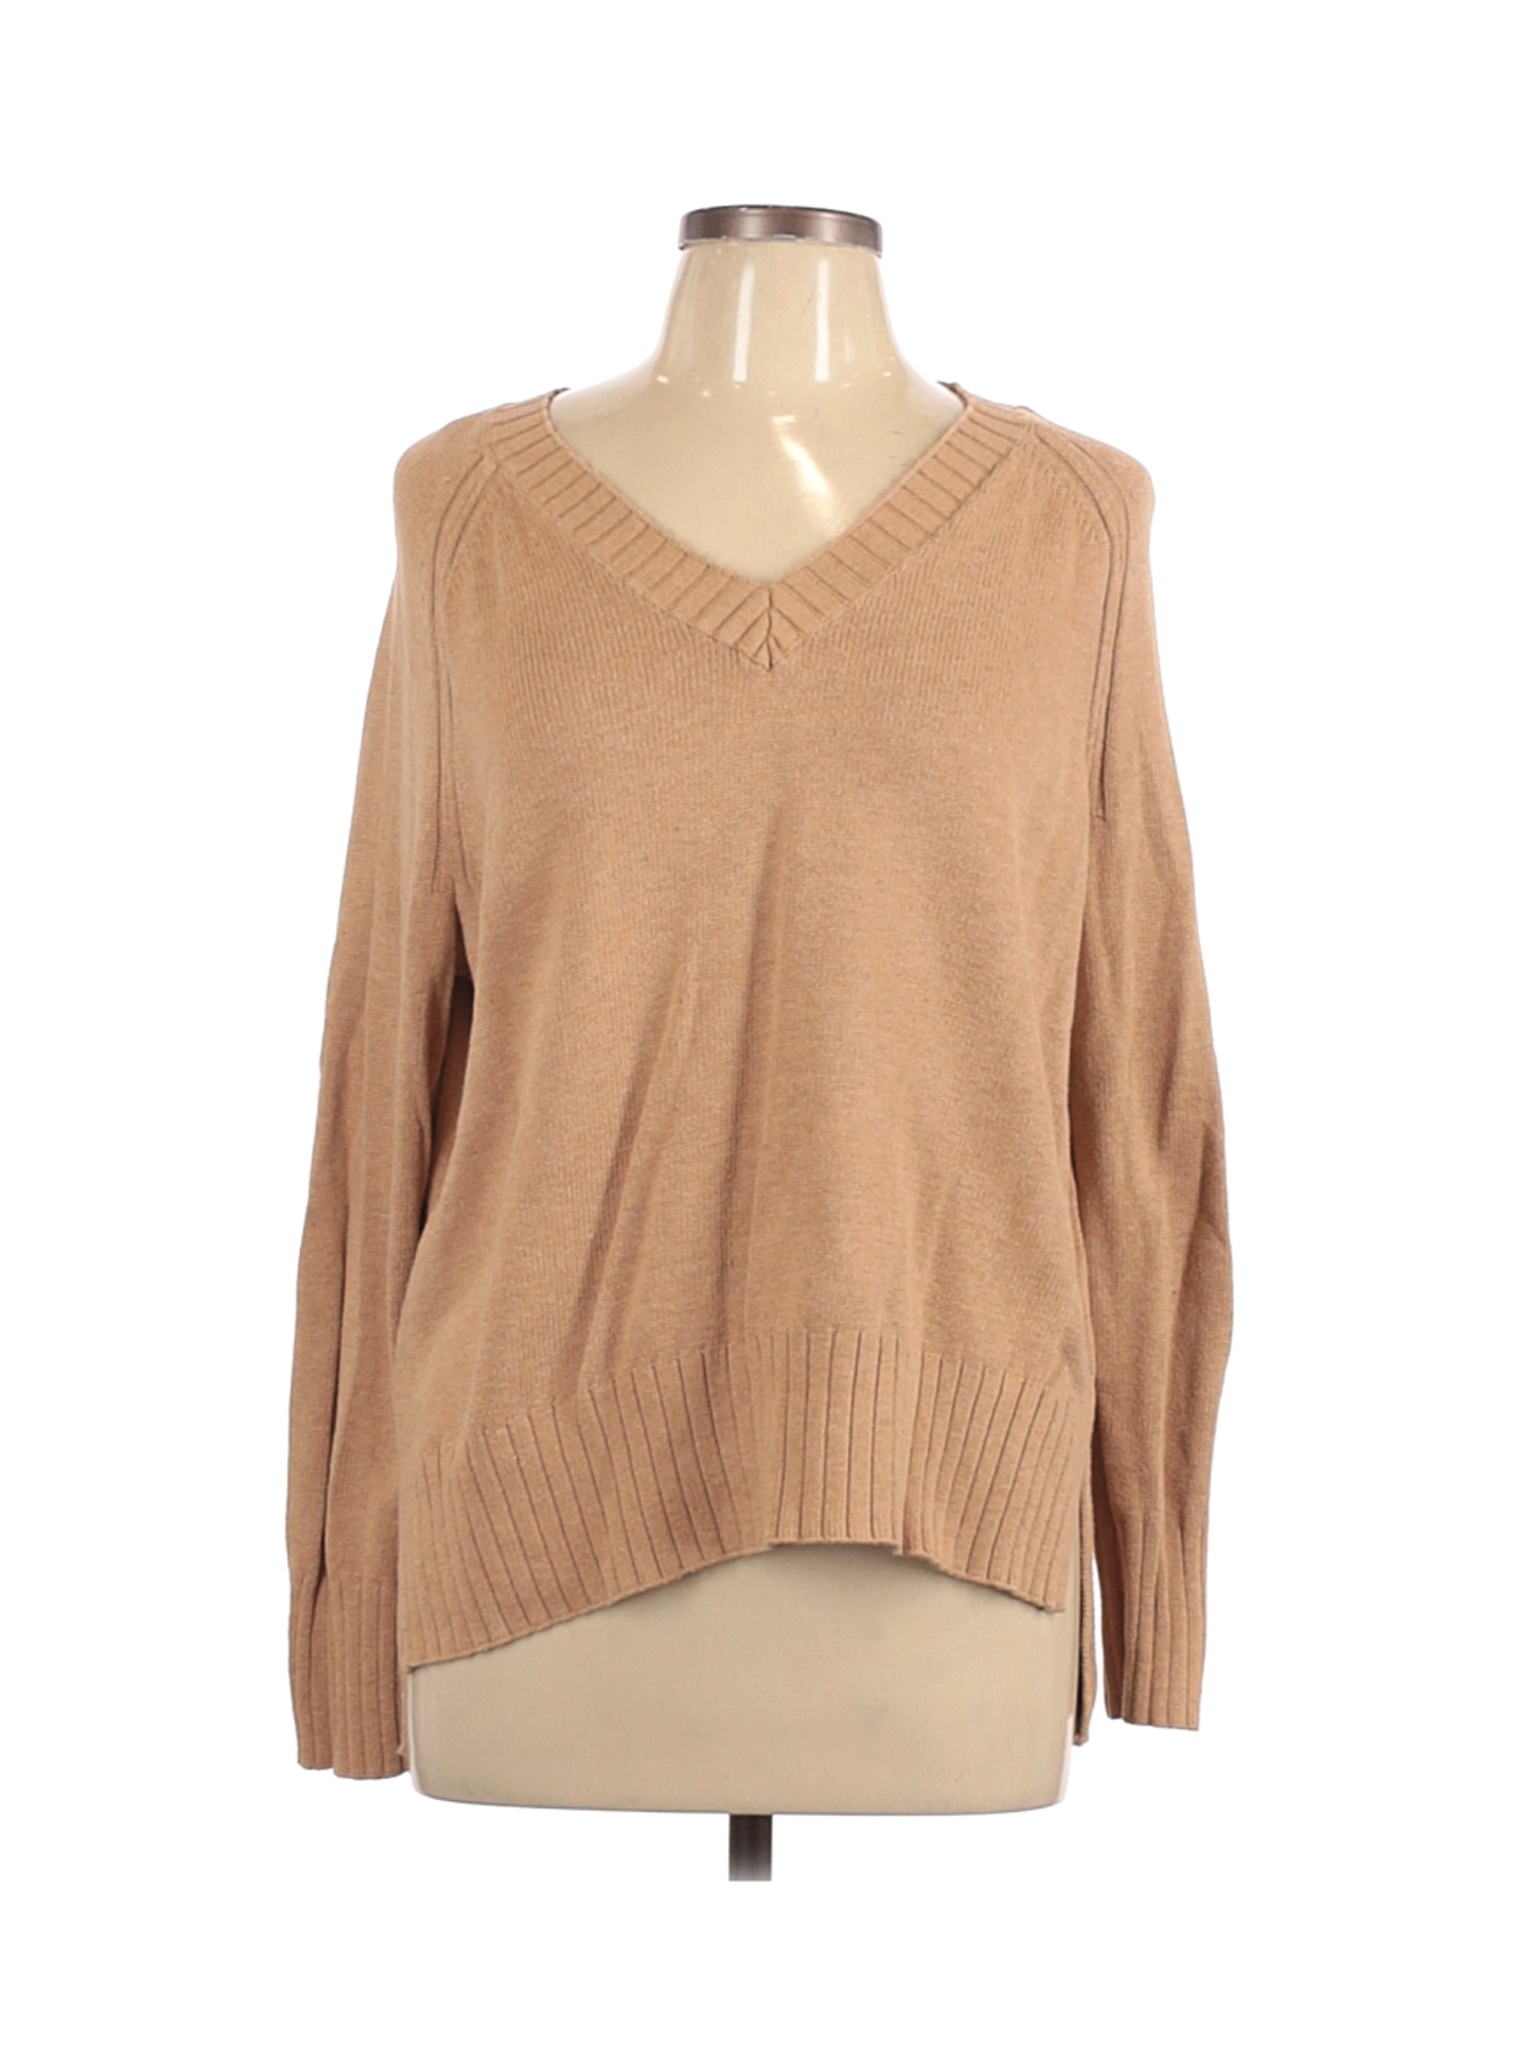 Old Navy Women Brown Pullover Sweater L | eBay